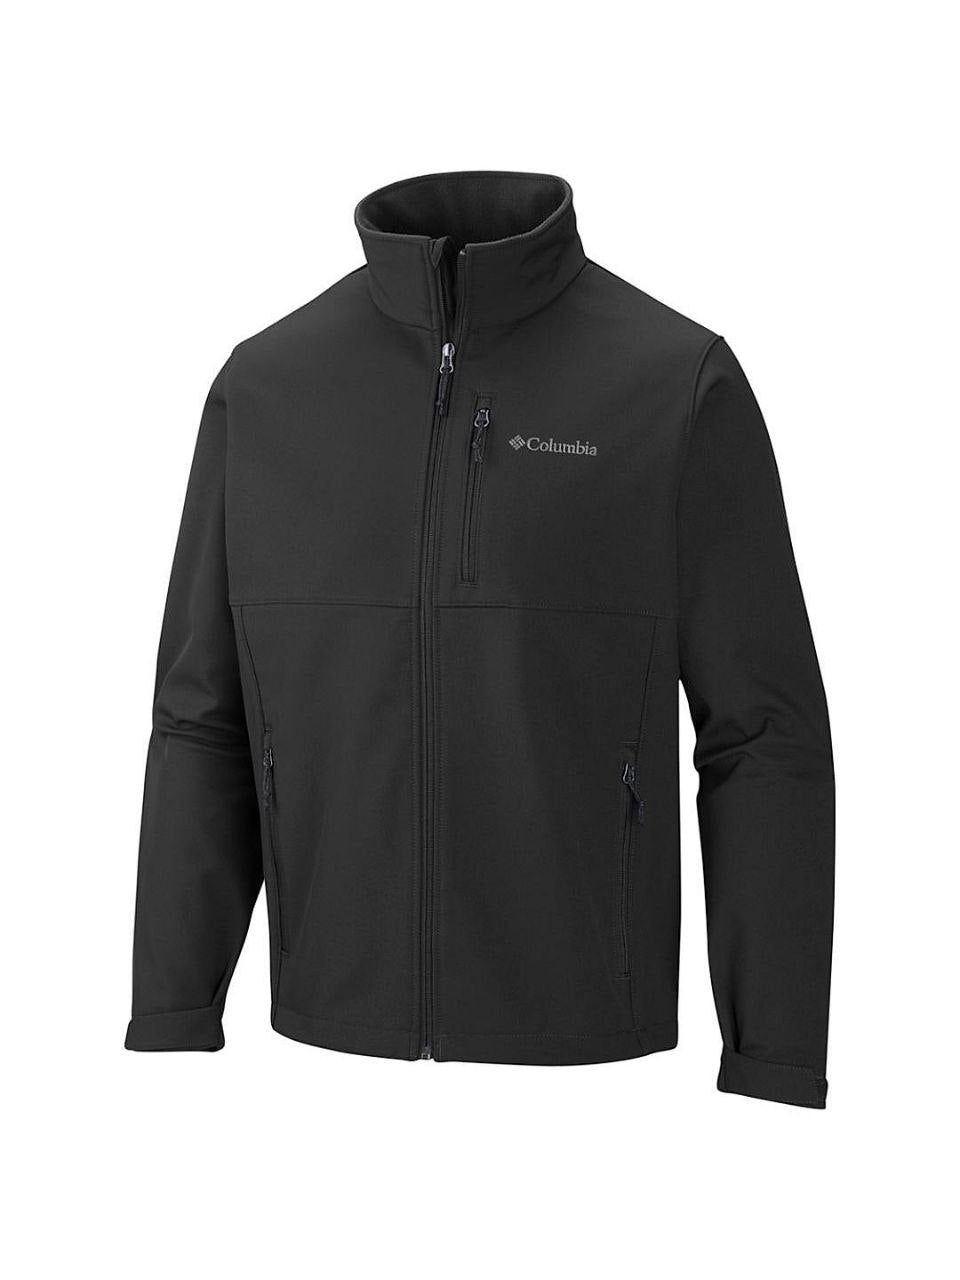 Cascade Ridge Softshell Jacket - Your Ultimate Outdoor